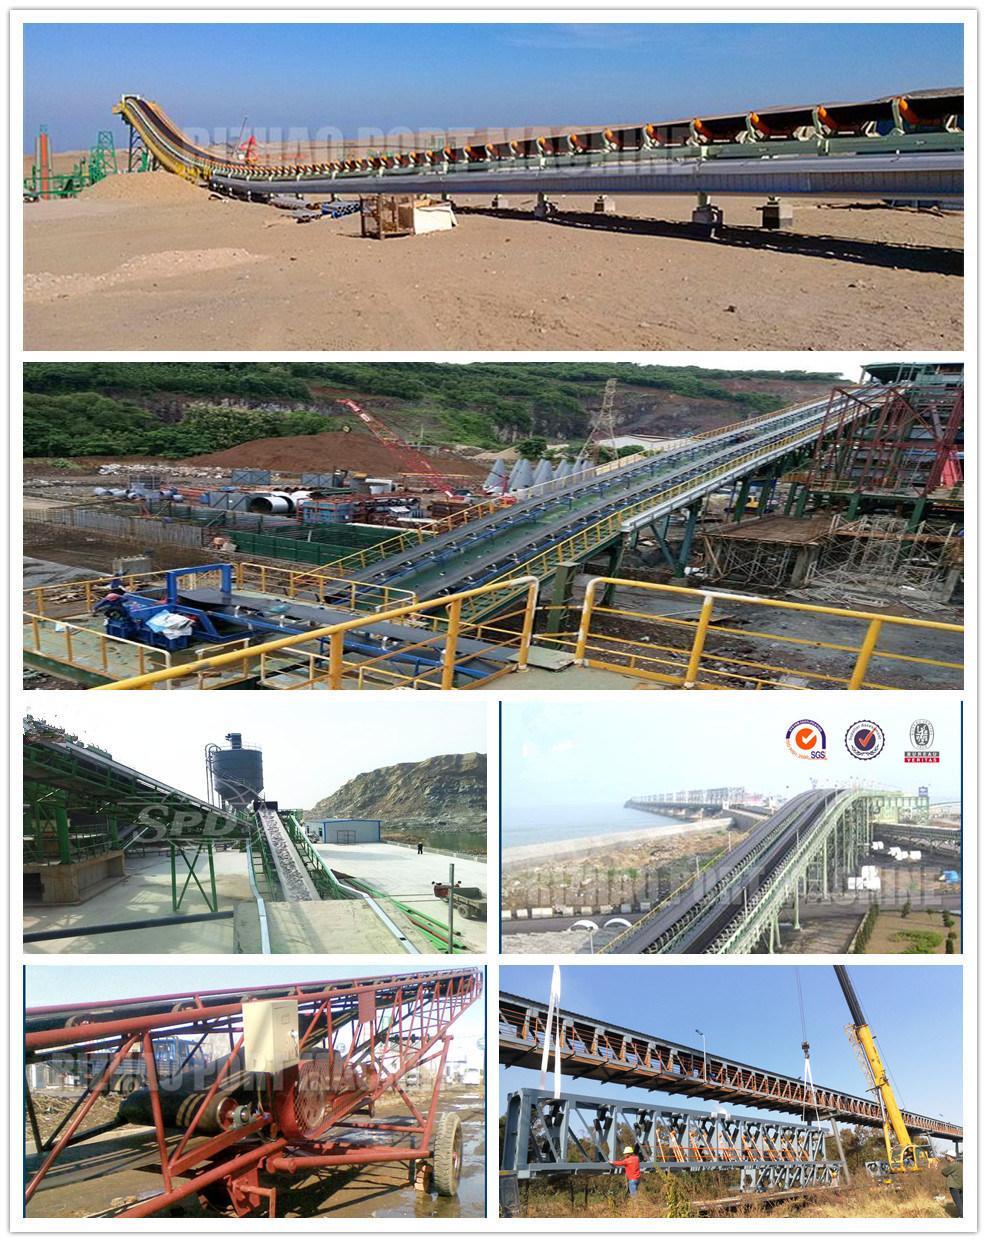 High-Accuracy Belt Conveyor Roller Set for Mining, Port, Cement Industries